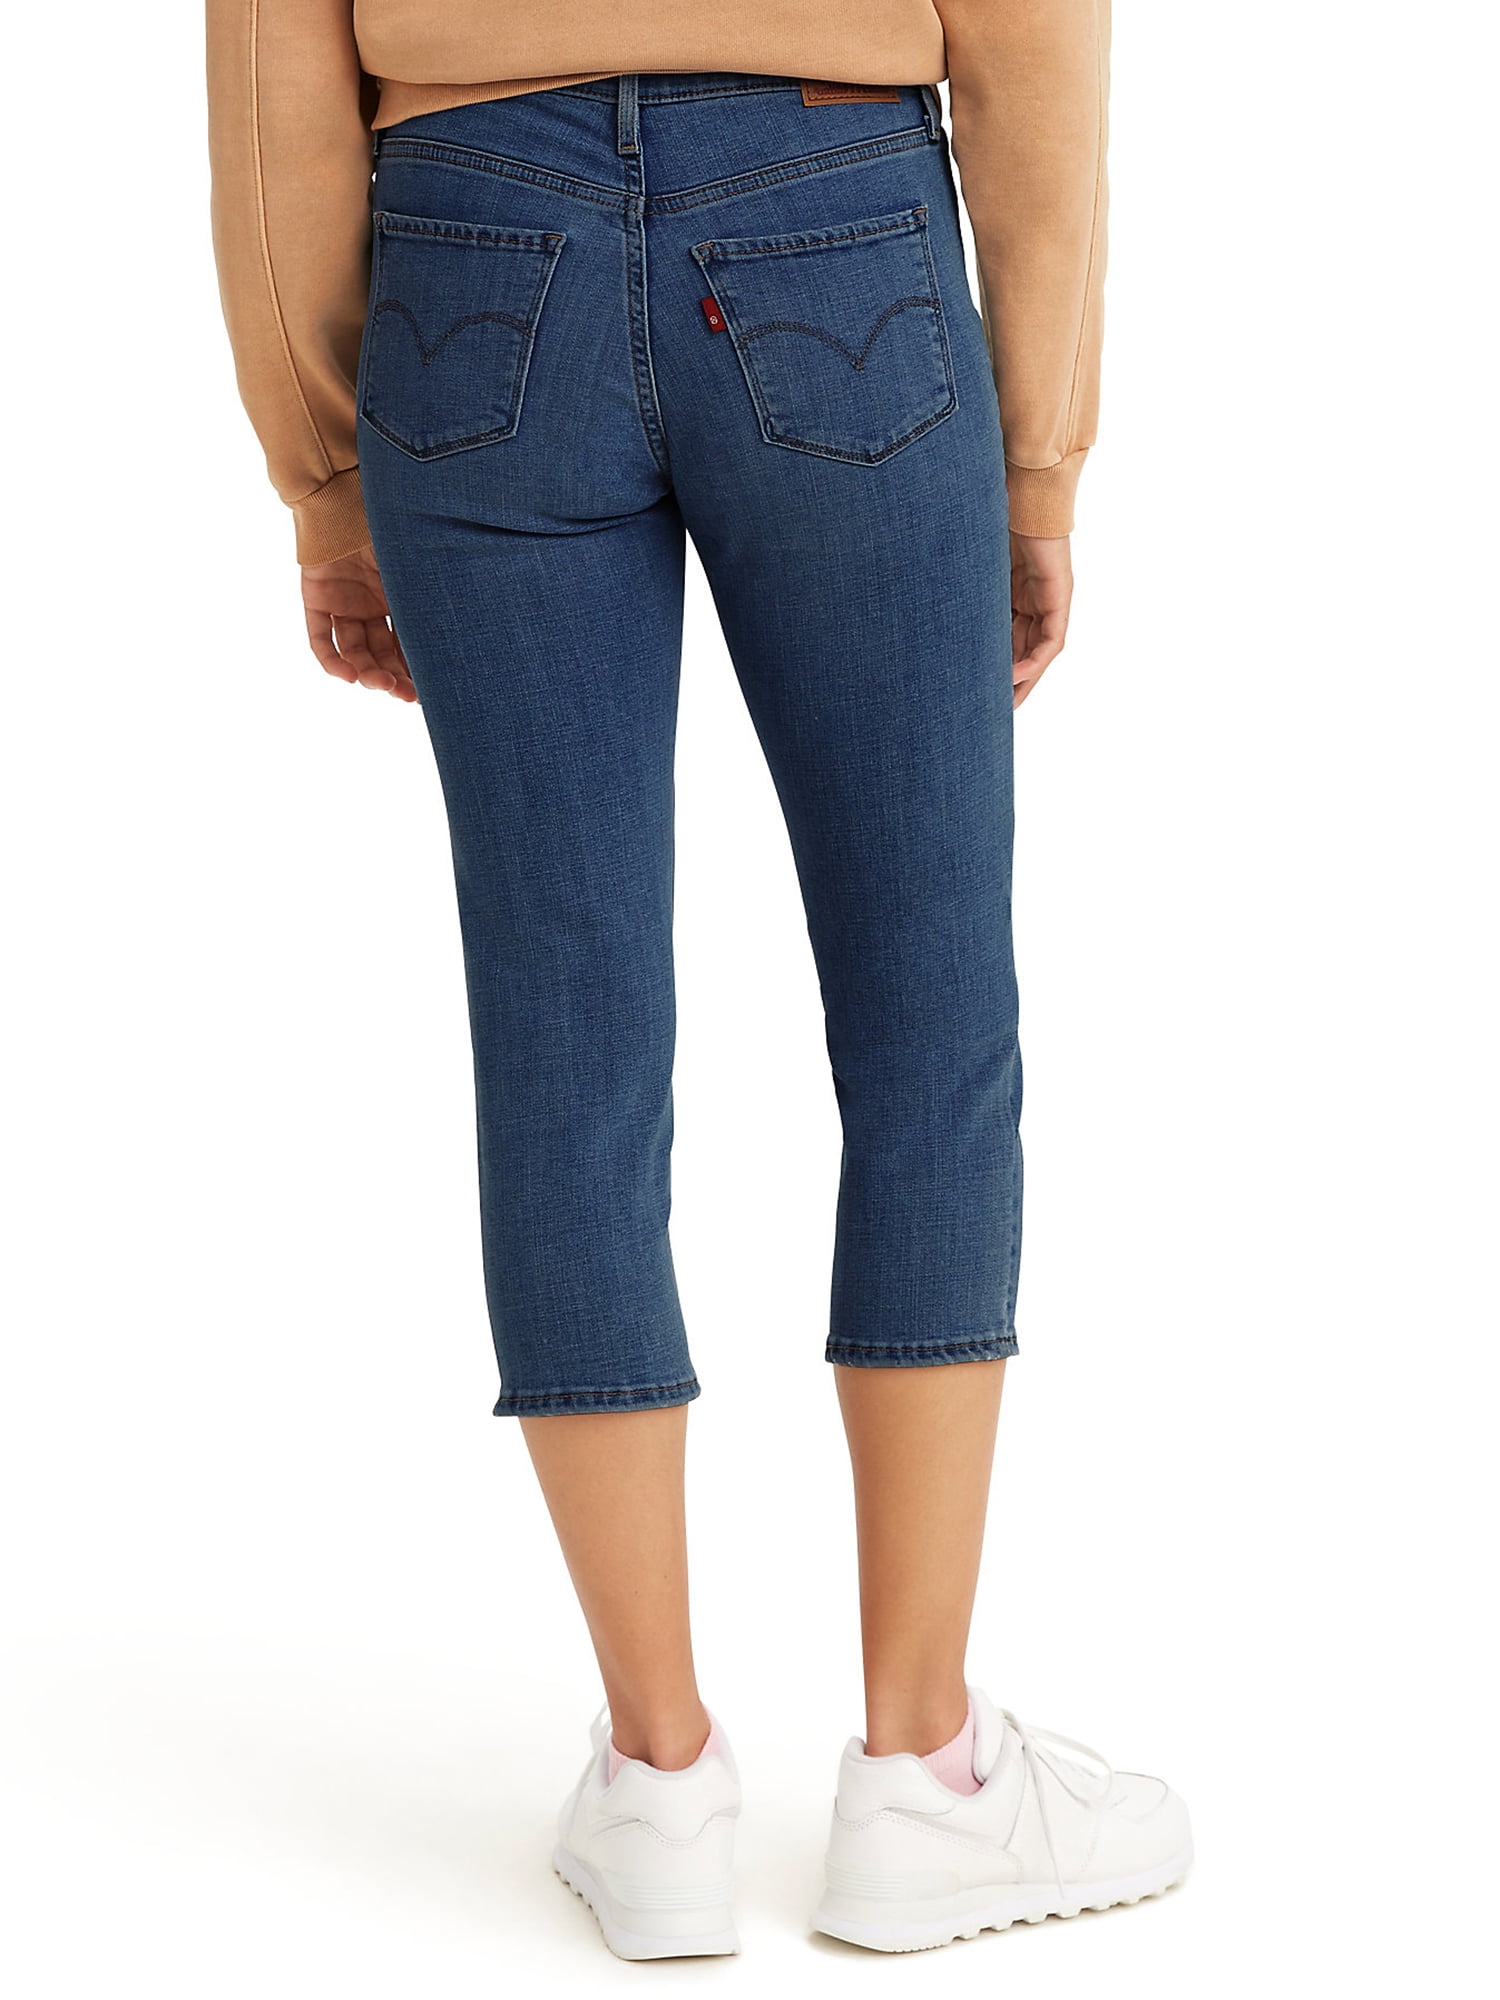 Levi's Original Women's 311 Shaping Skinny Capri Jeans